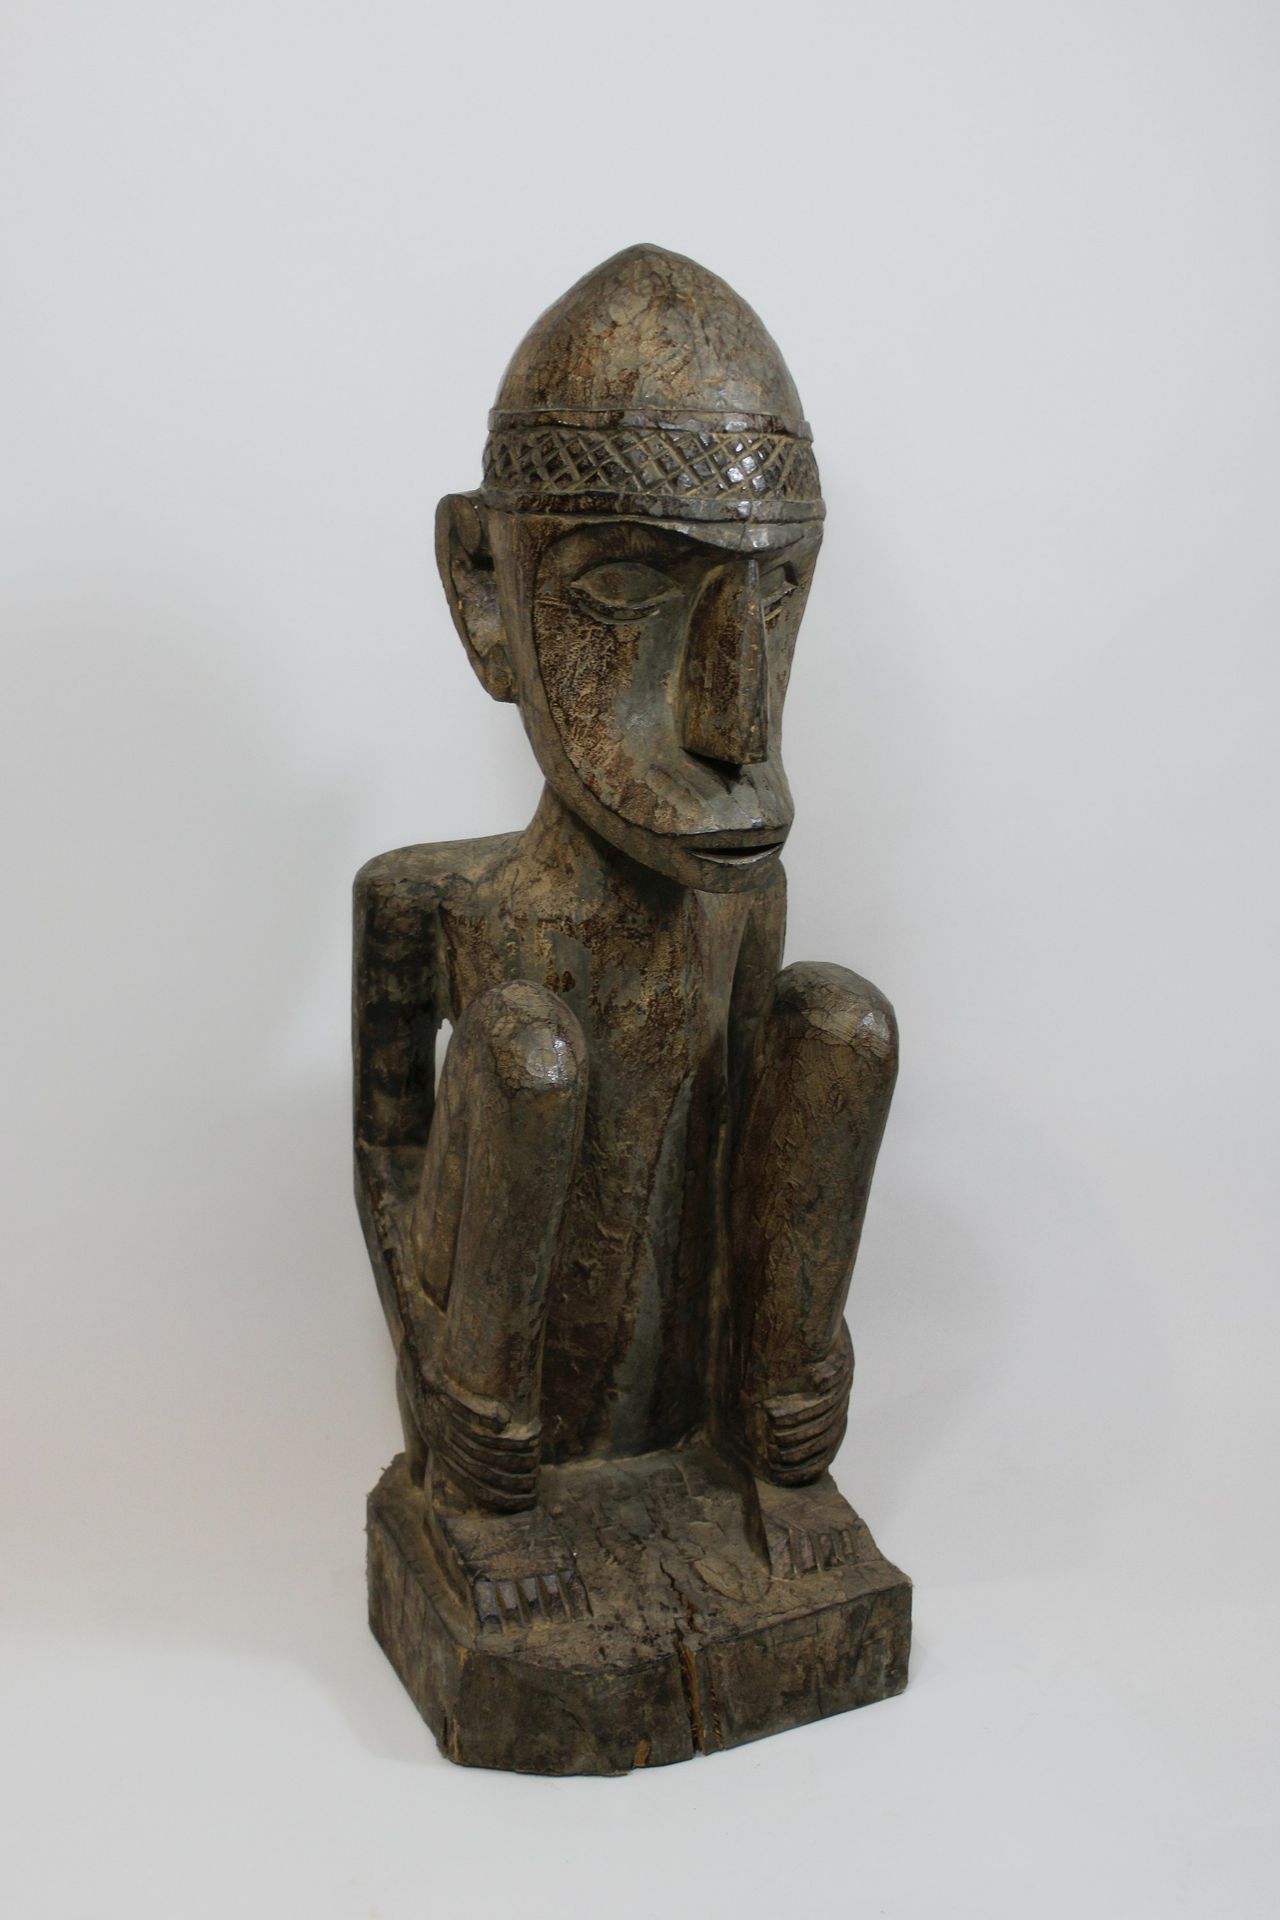 Ibeji Skulptur, Yoruba, Nigeria 
Ibeji雕塑，可能是约鲁巴人，尼日利亚，木头，整体雕刻。高：96厘米。状况良好，与年代有关，&hellip;